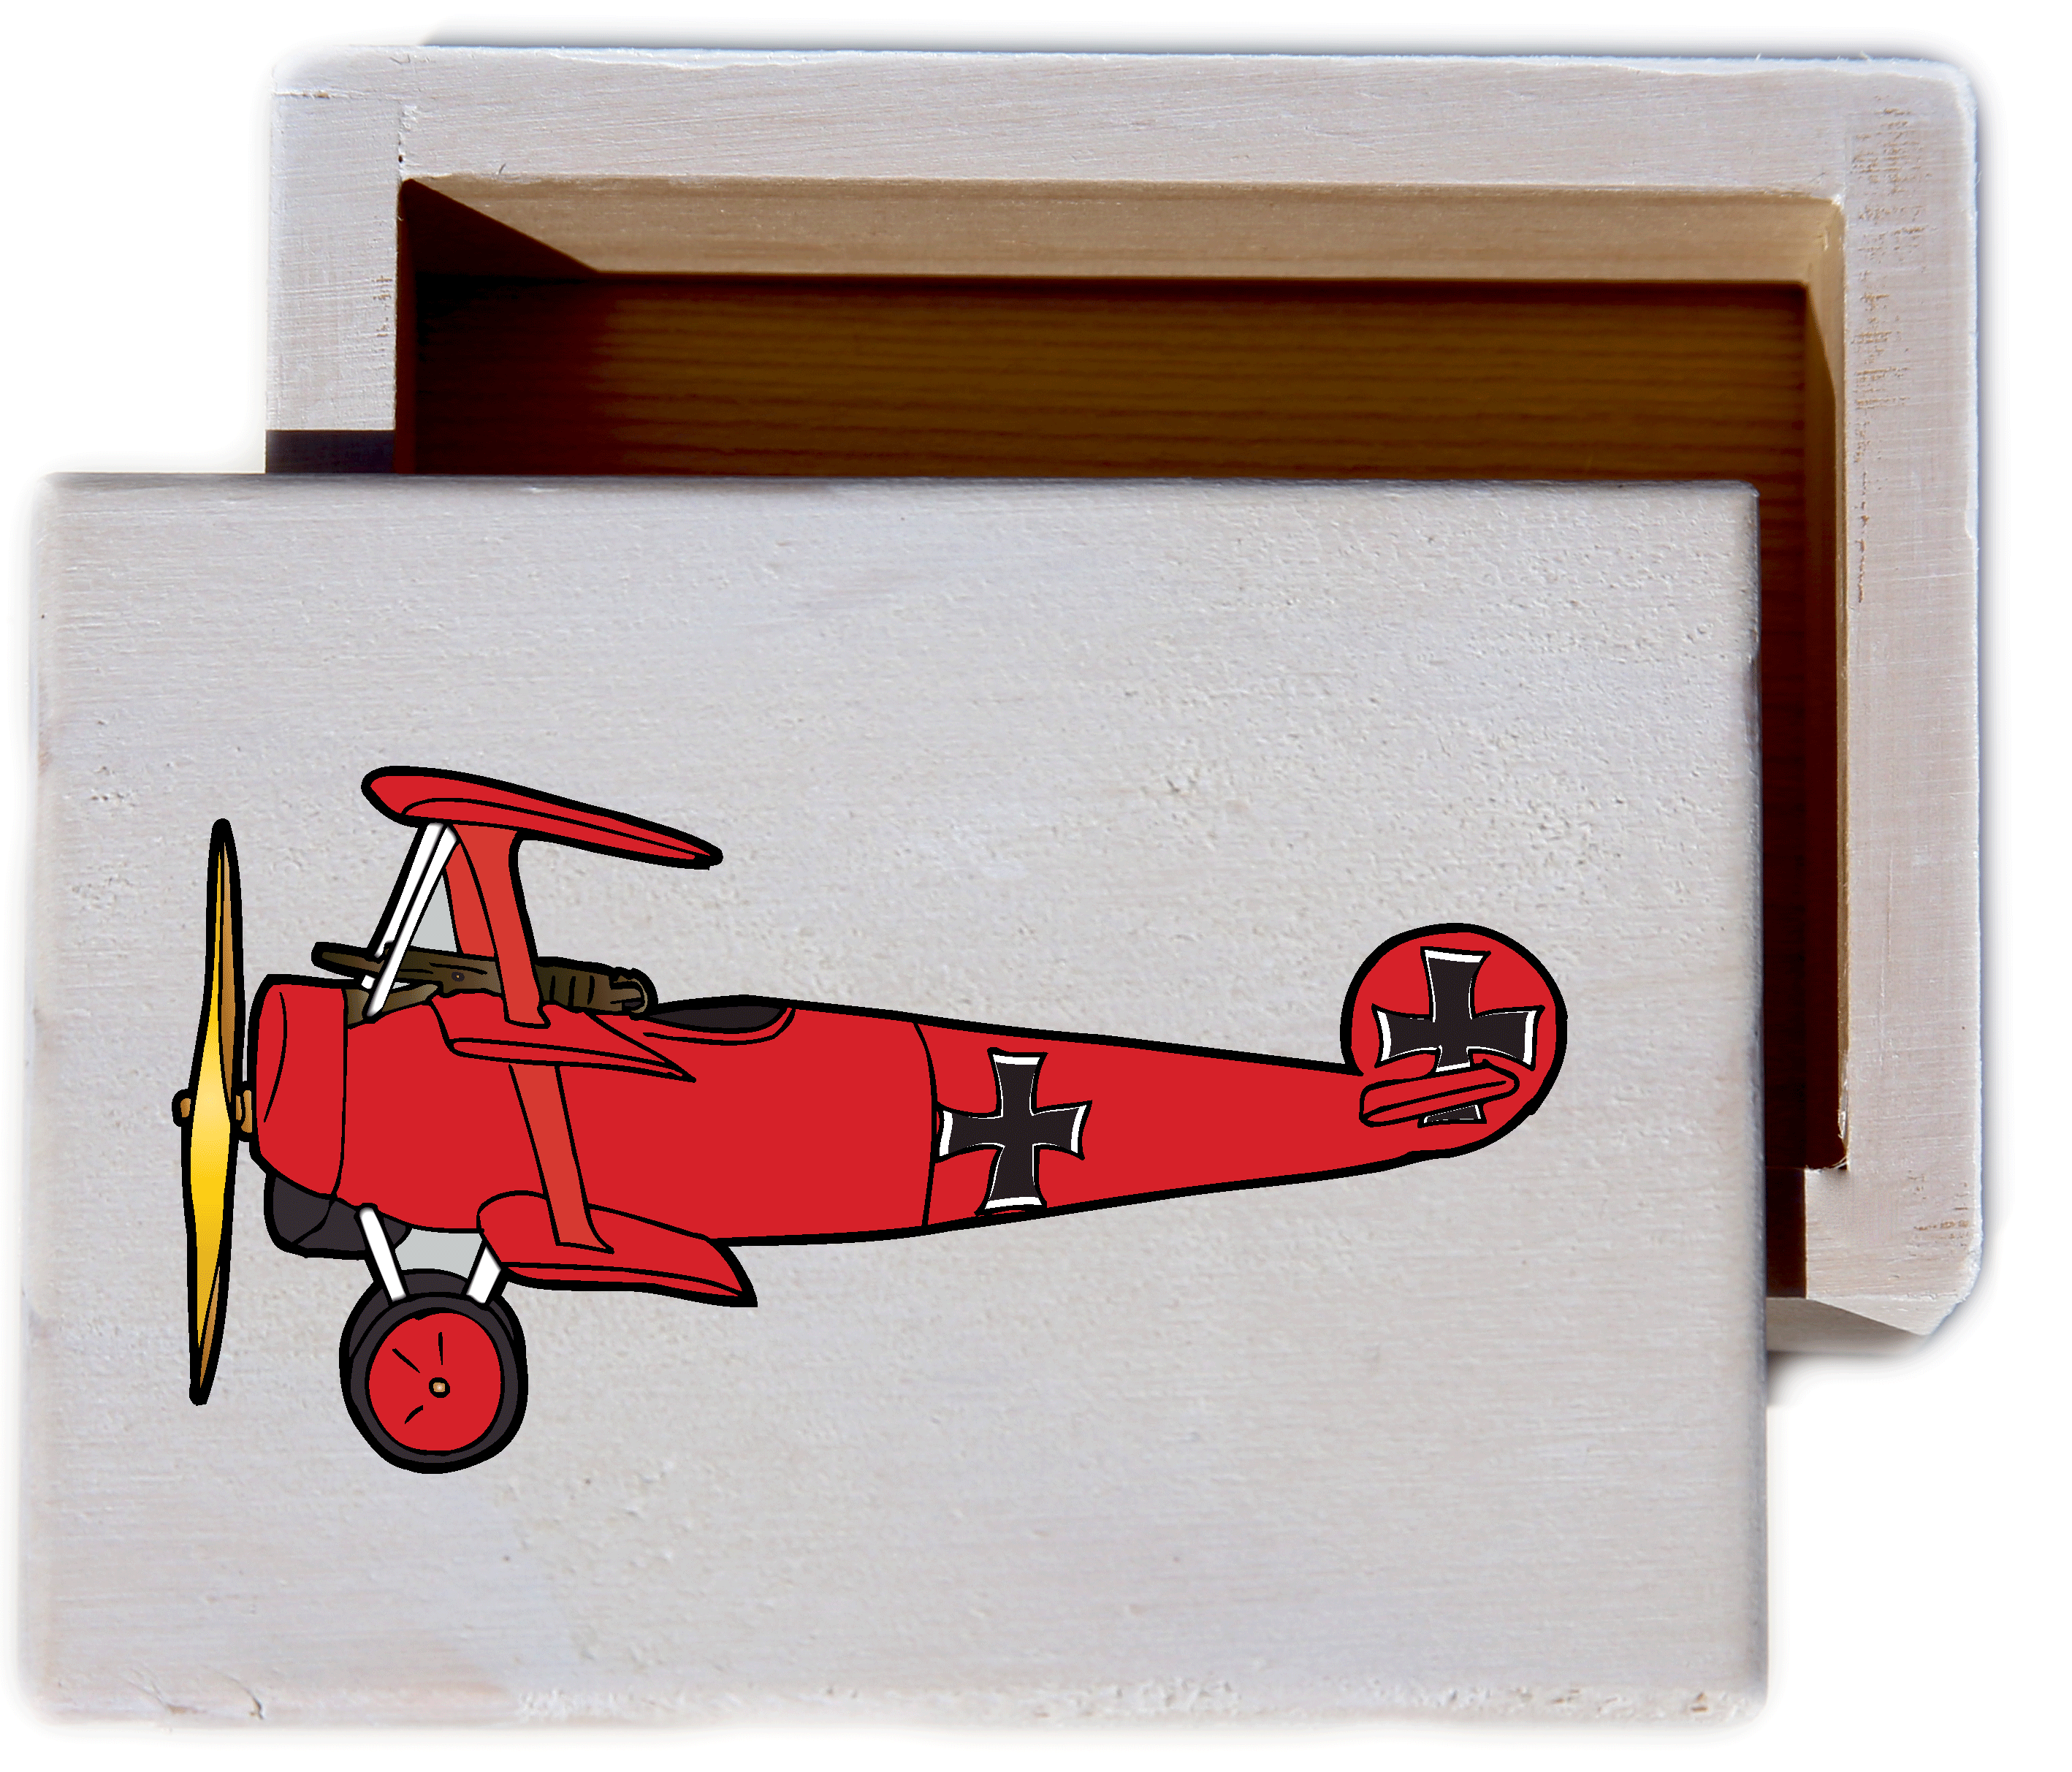 Vintage Plane White Wash Wood Keepsake Collectible Box